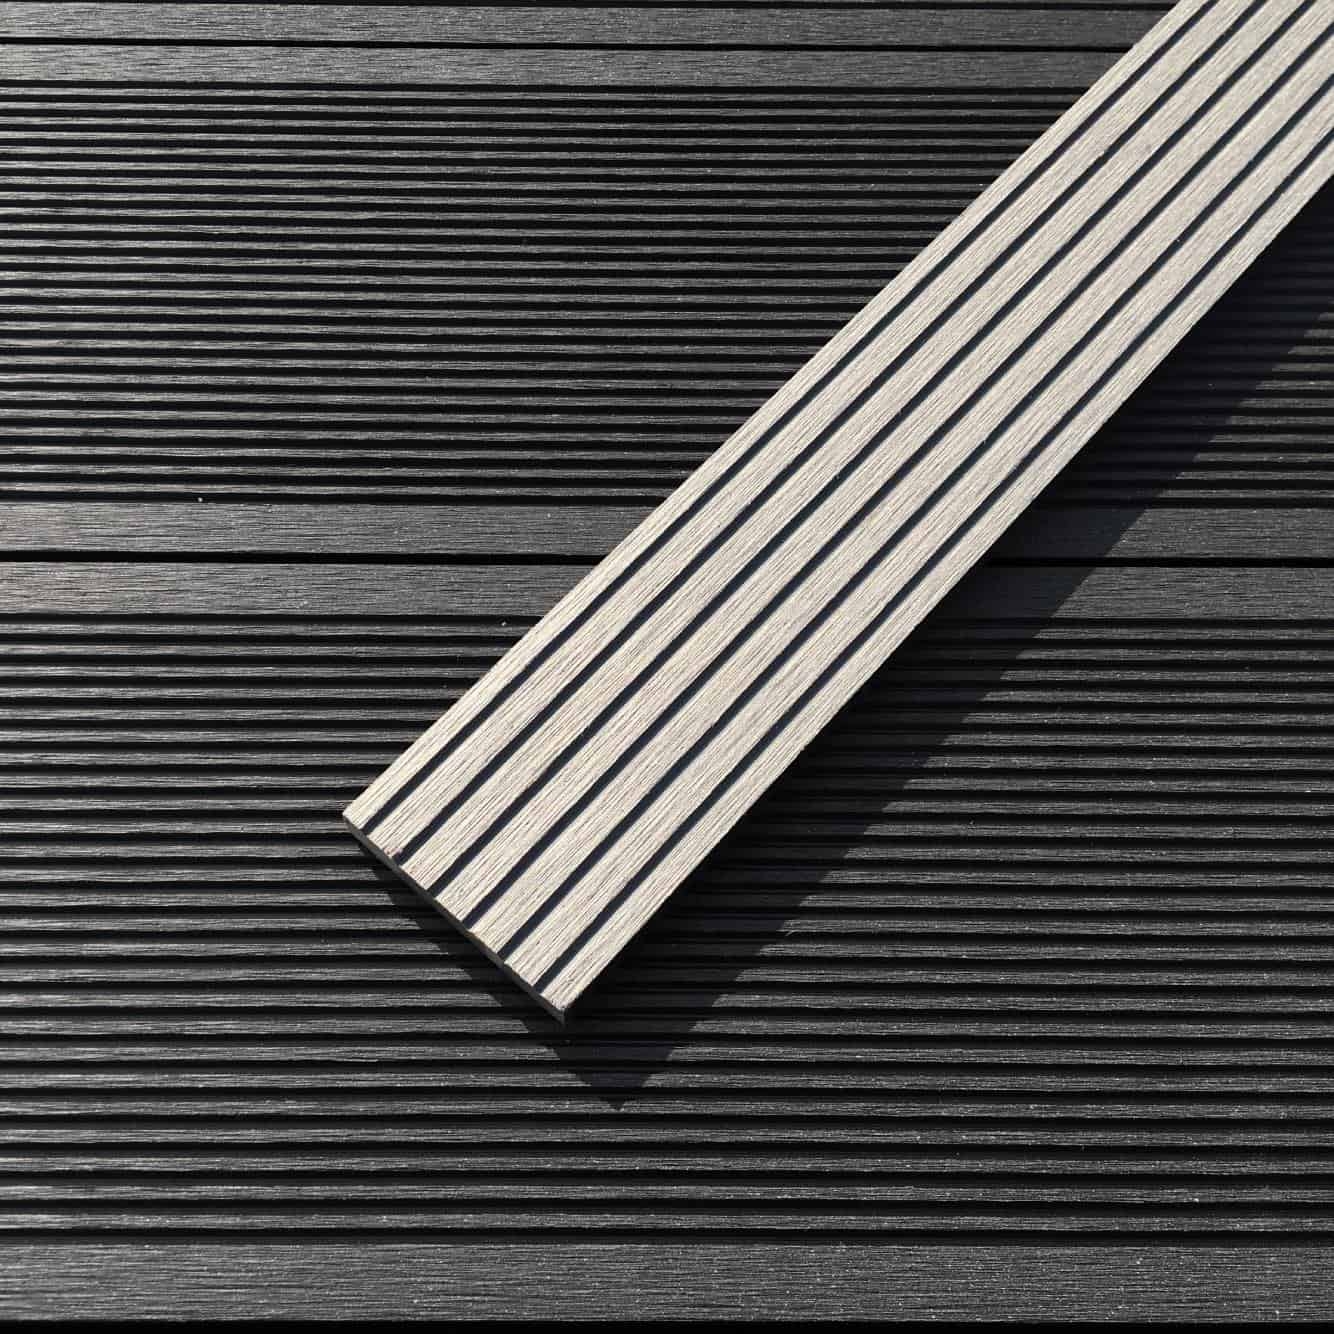 COMPOSITE WOOD EDGING TRIM (60 x 10mm) 2.2m LENGTHS Grey